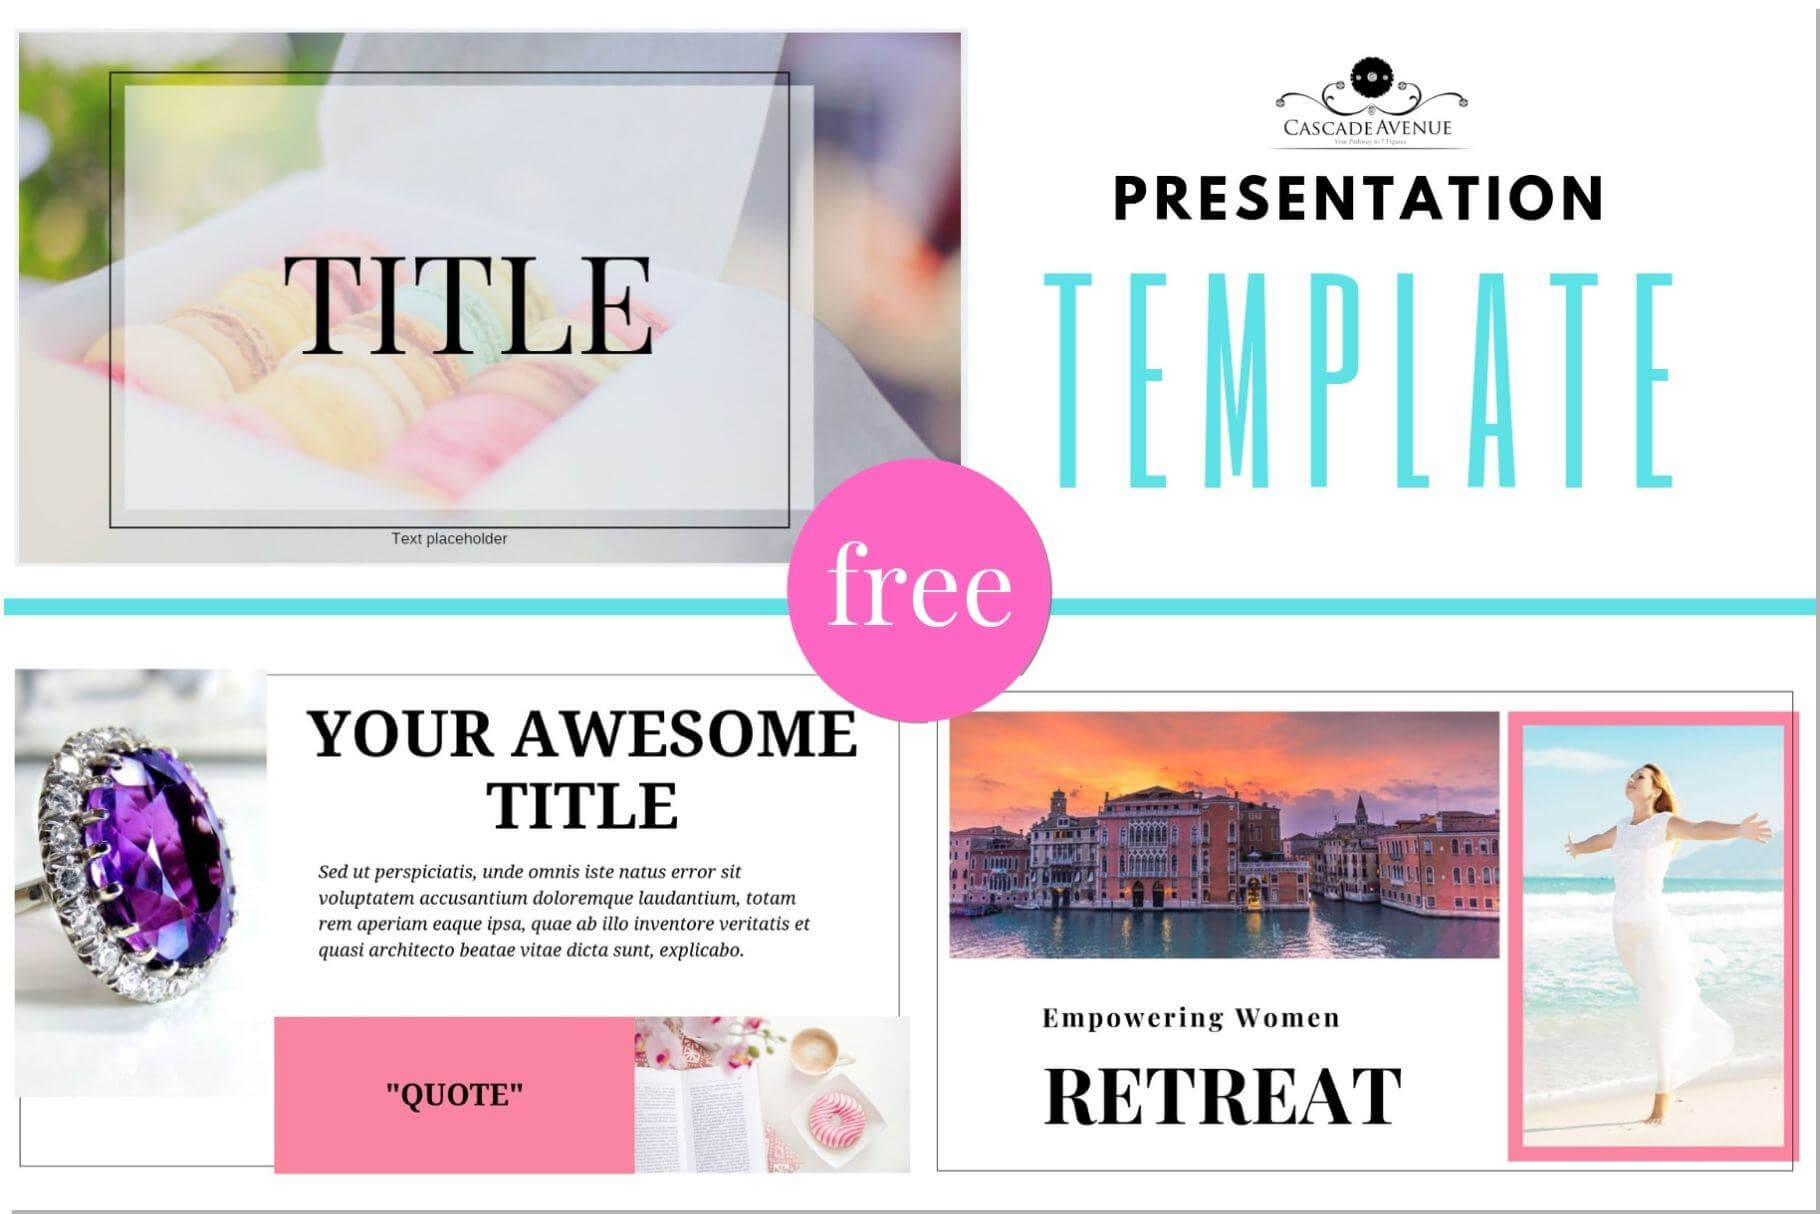 free-canva-presentation-template-modern-cascade-avenue-regarding